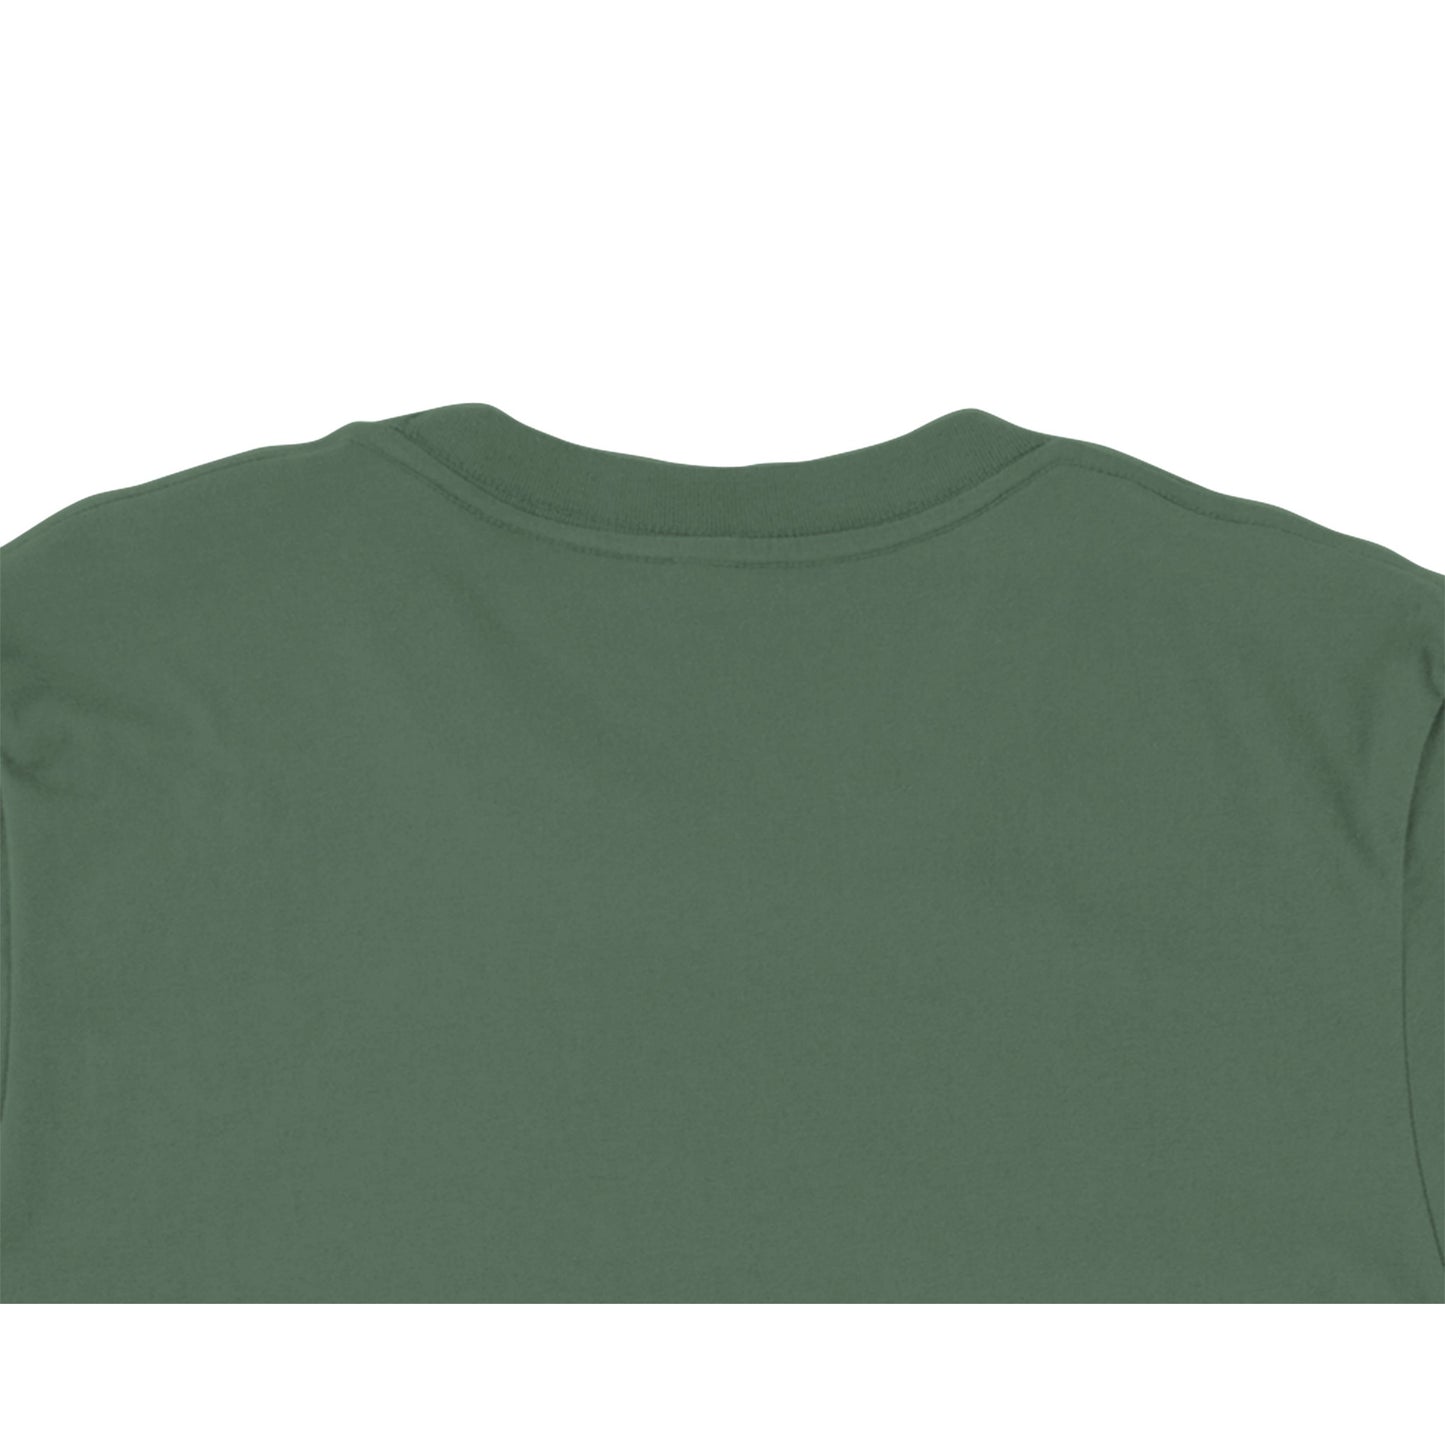 Budget Unisex Crewneck T-shirt/Allergic/To-Negative-People